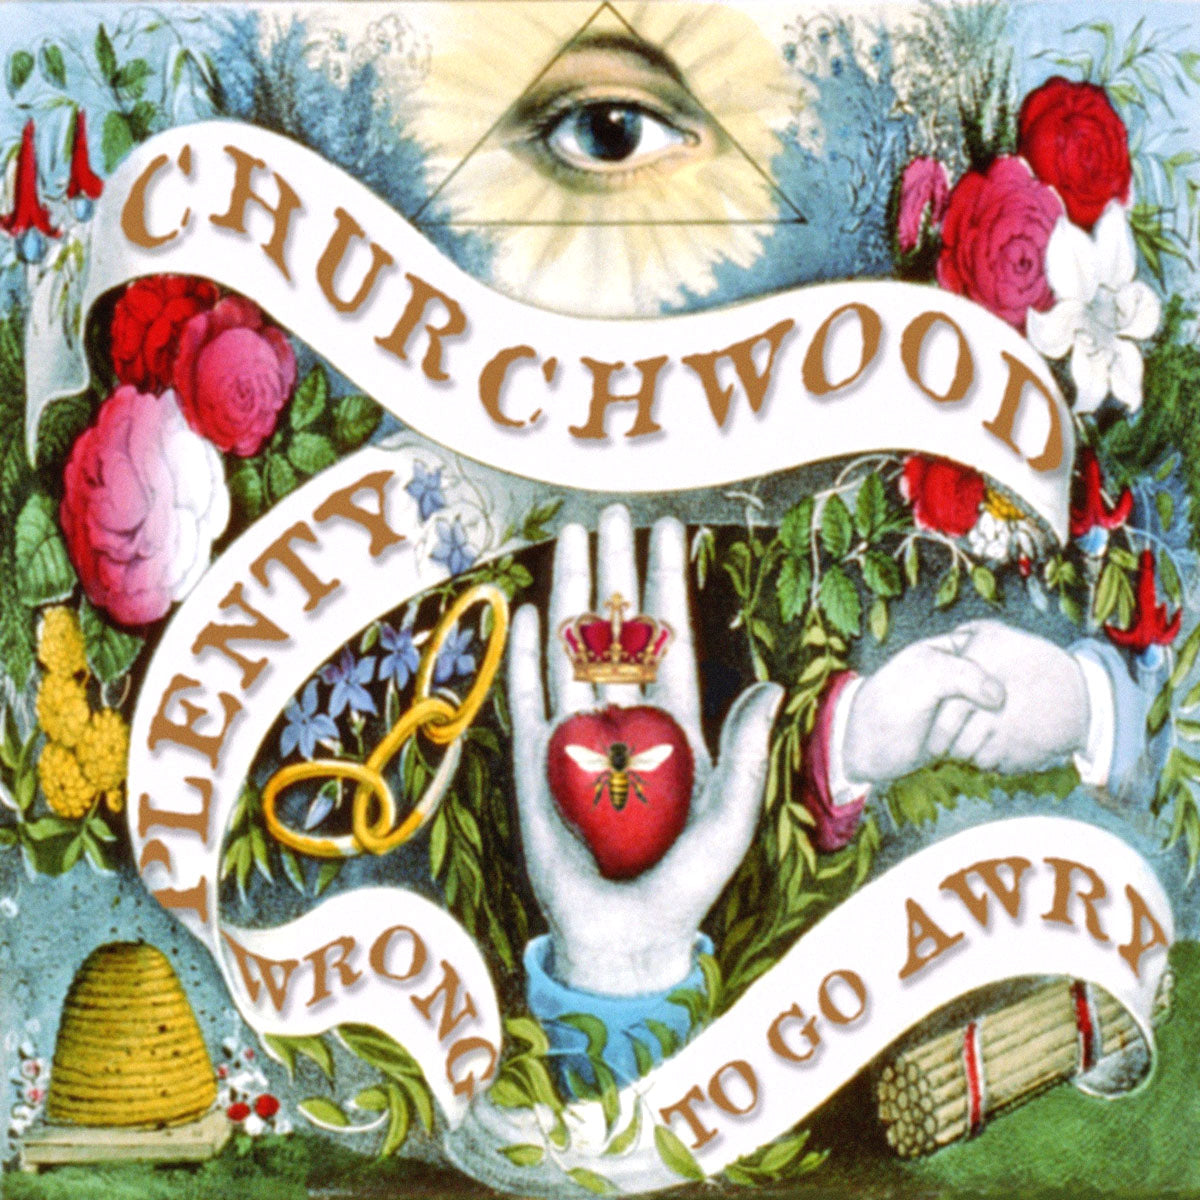 Churchwood- Pleanty Wrong To Go Awry LP ~LTD TO 200 COPIES / EX POISON 13!